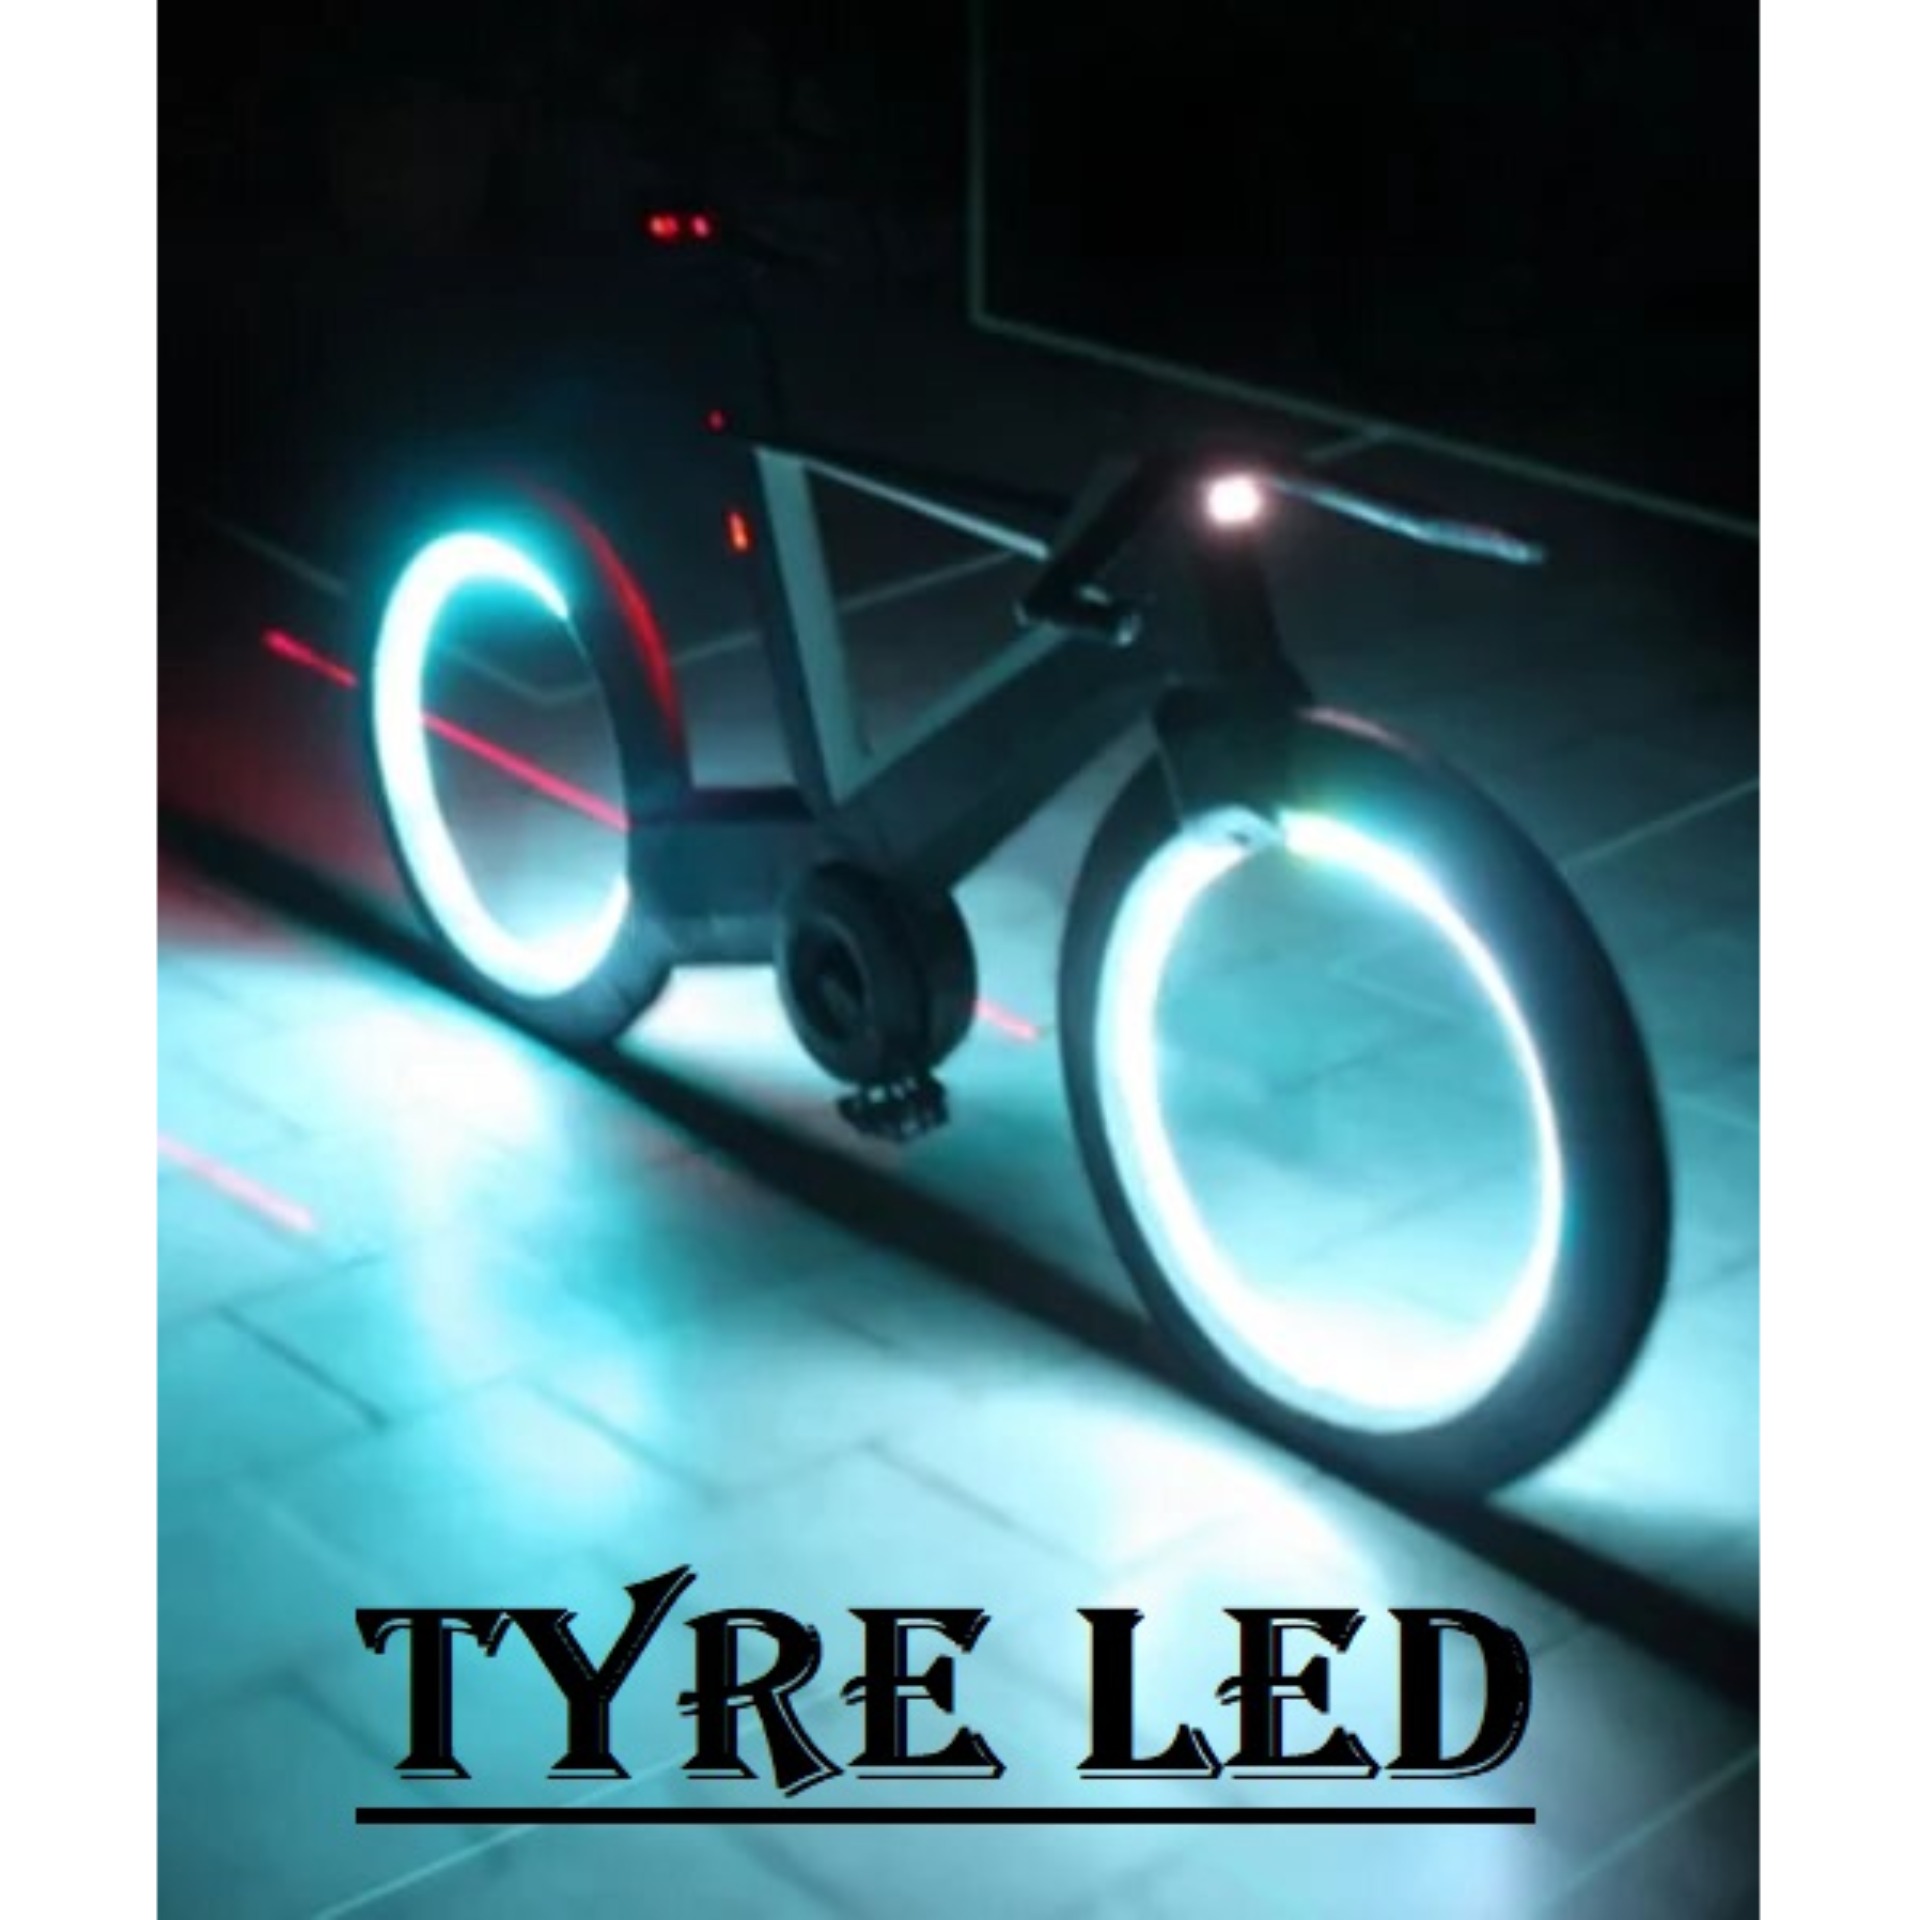 light wala cycle